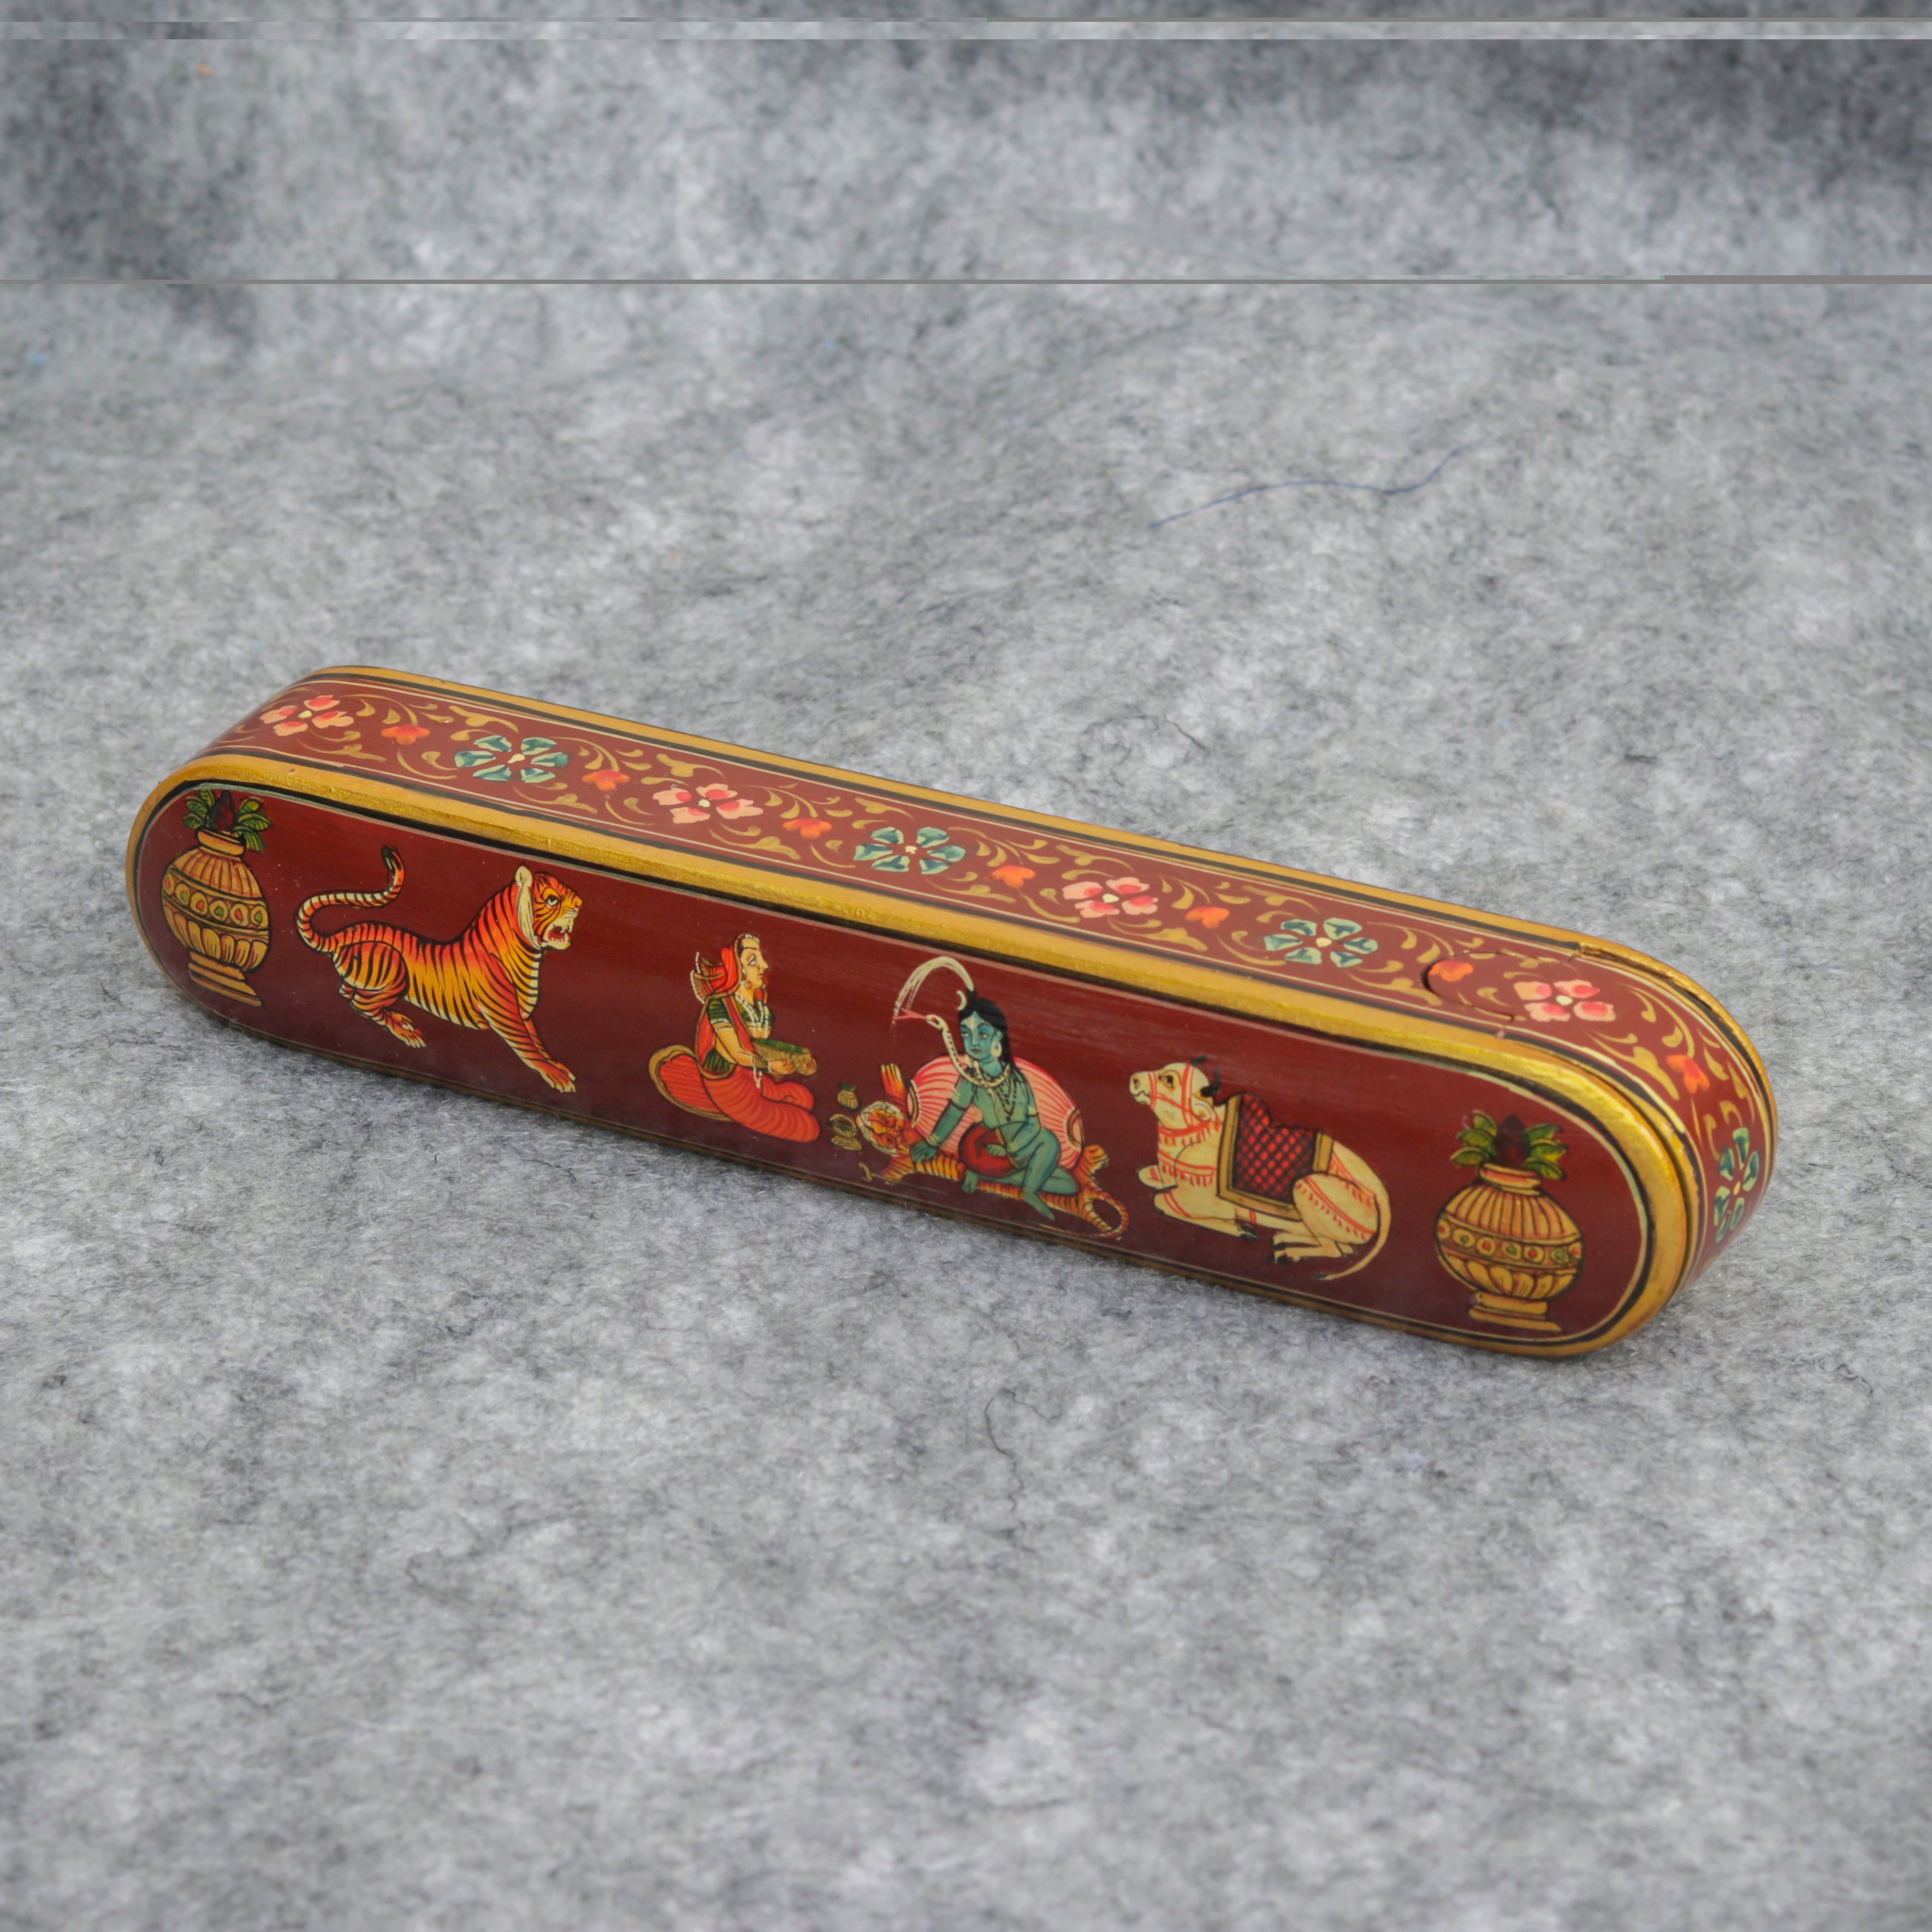 Classic Indian hand painted premium pen pencil Box Wooden Box